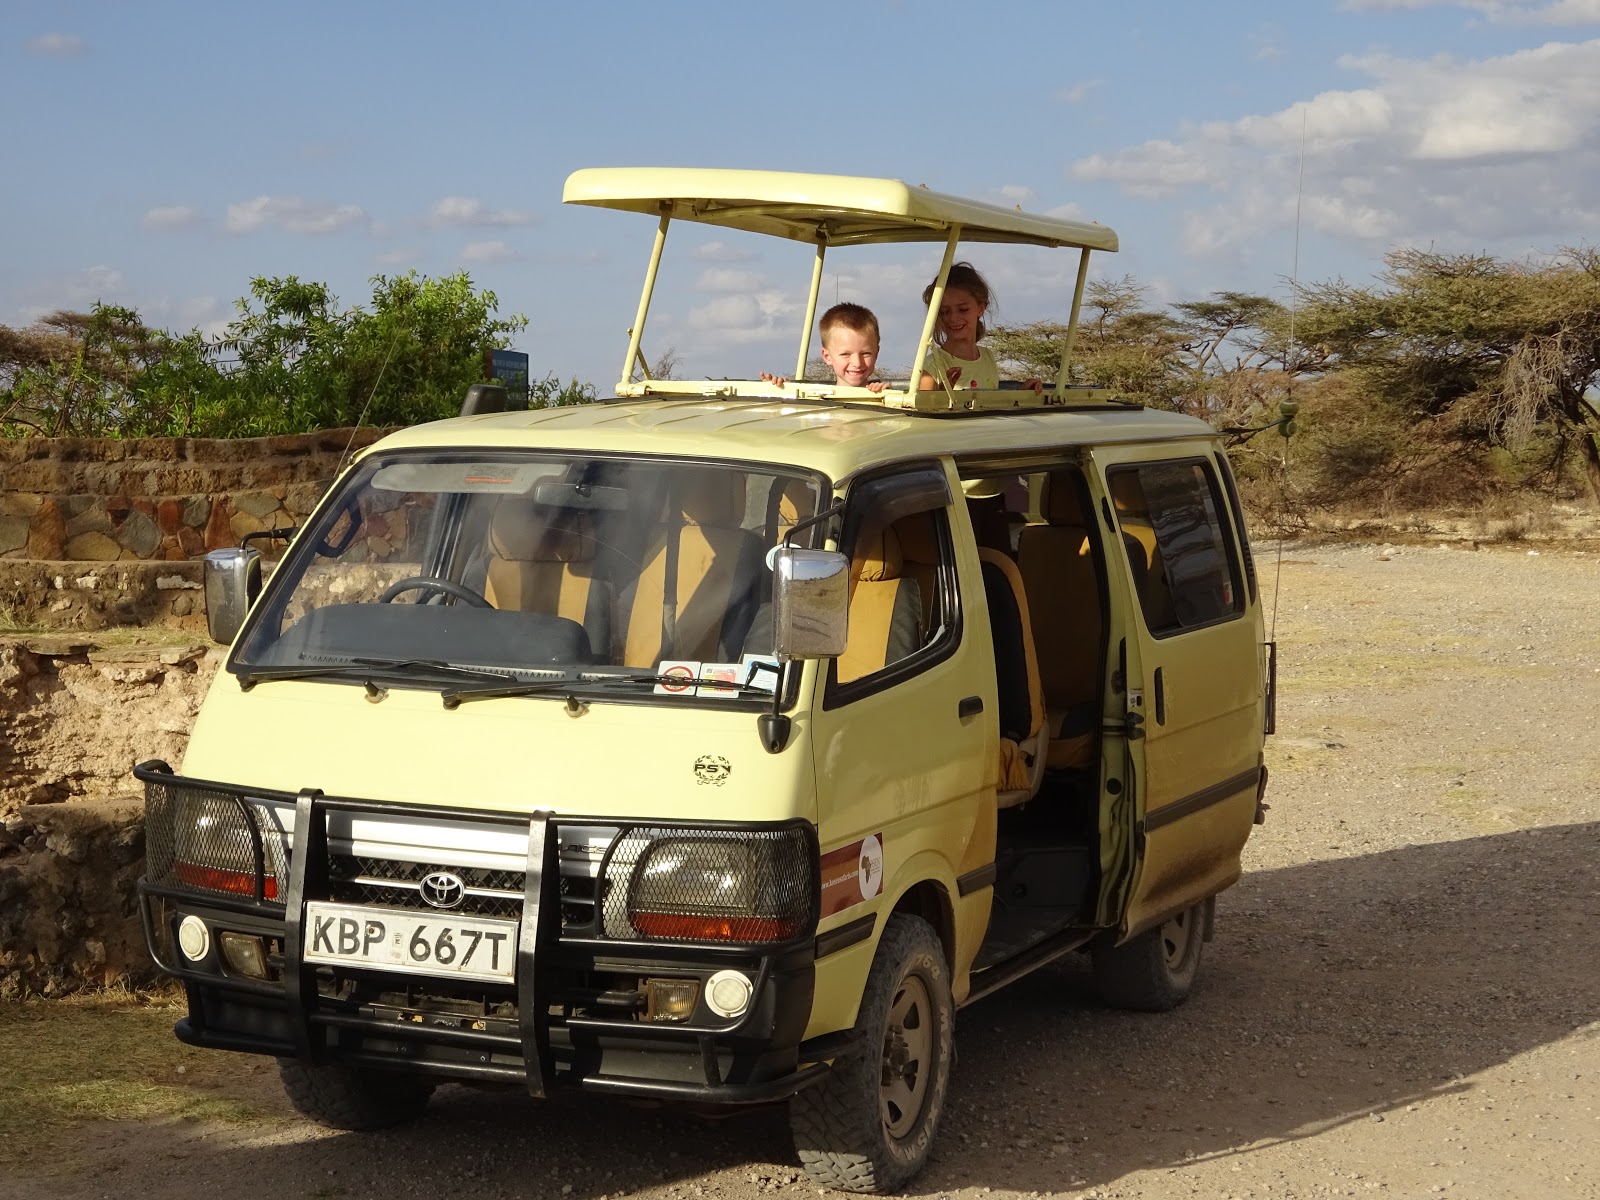 Adventures Await!: A Safari in Kenya